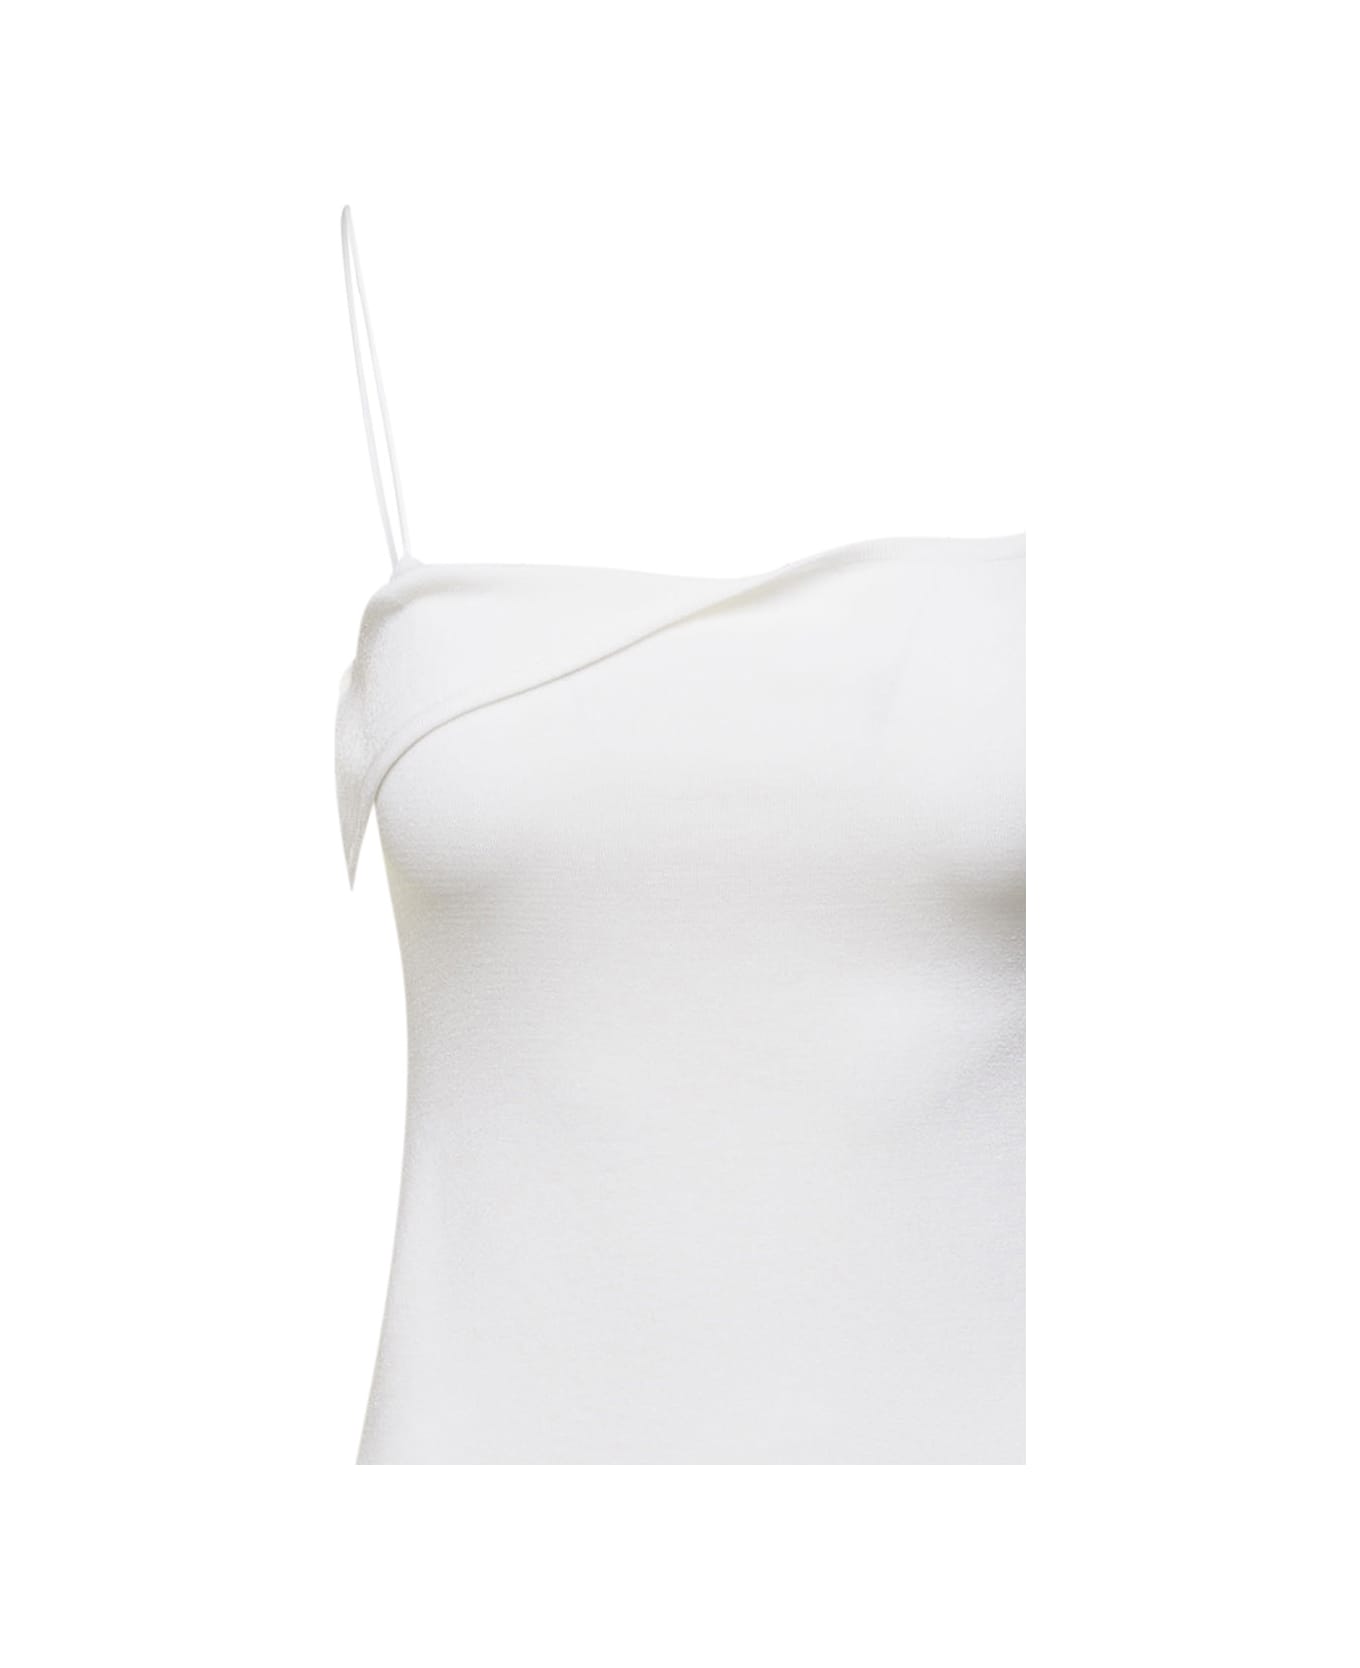 Jacquemus White 'la Robe Aro' Mermaid Dress In Viscose Woman - White